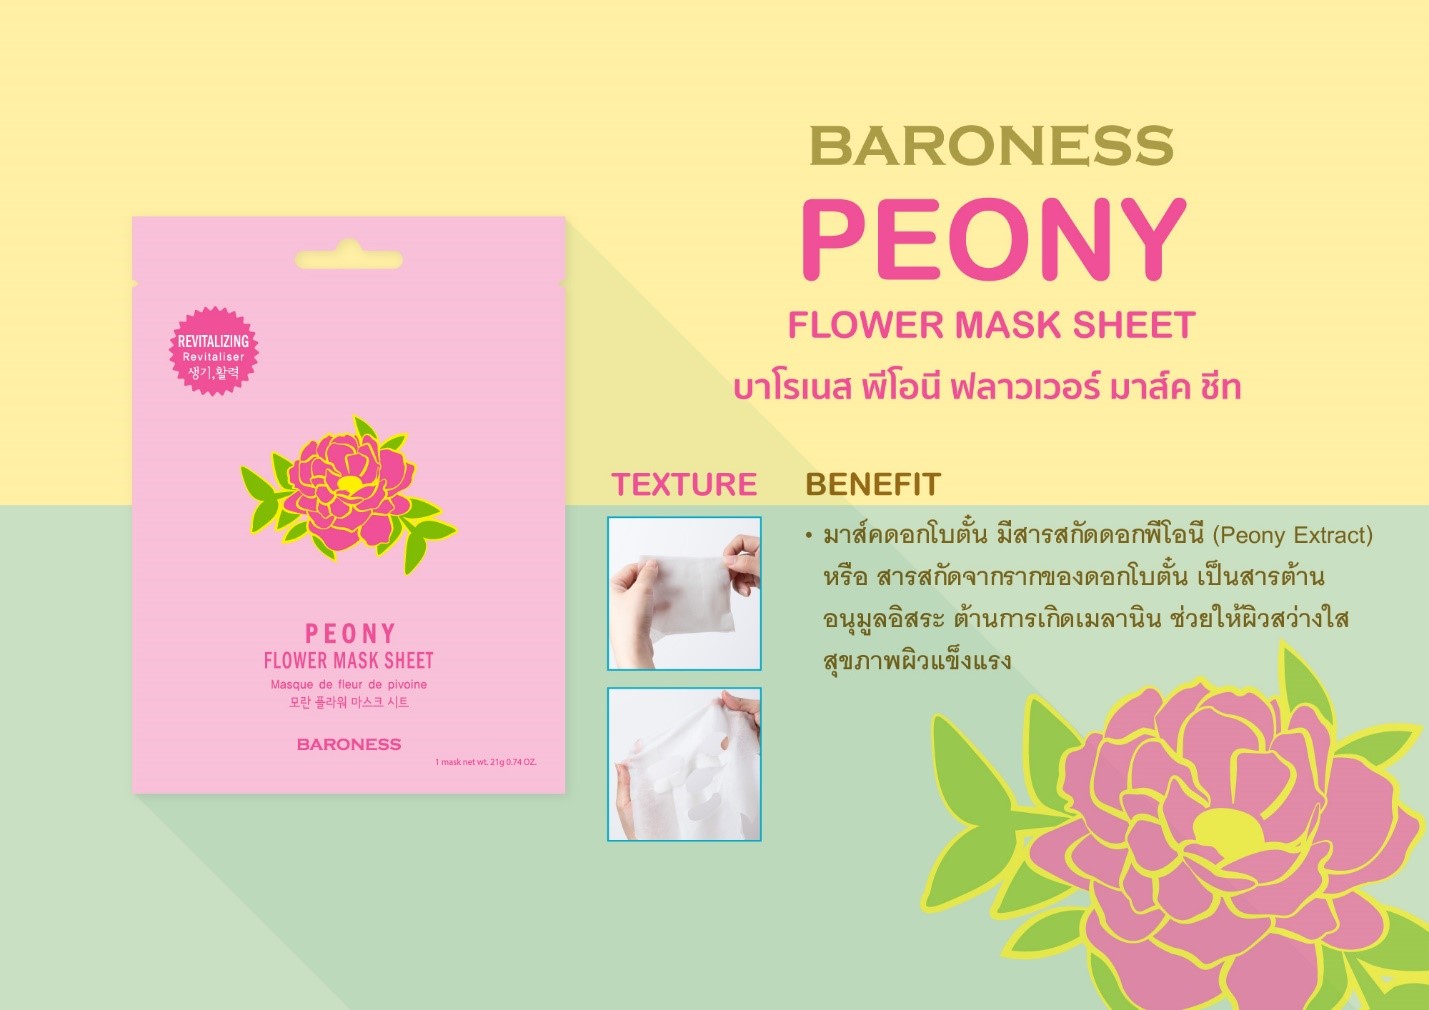 Baroness Peony Flower Mask Sheet 21g 